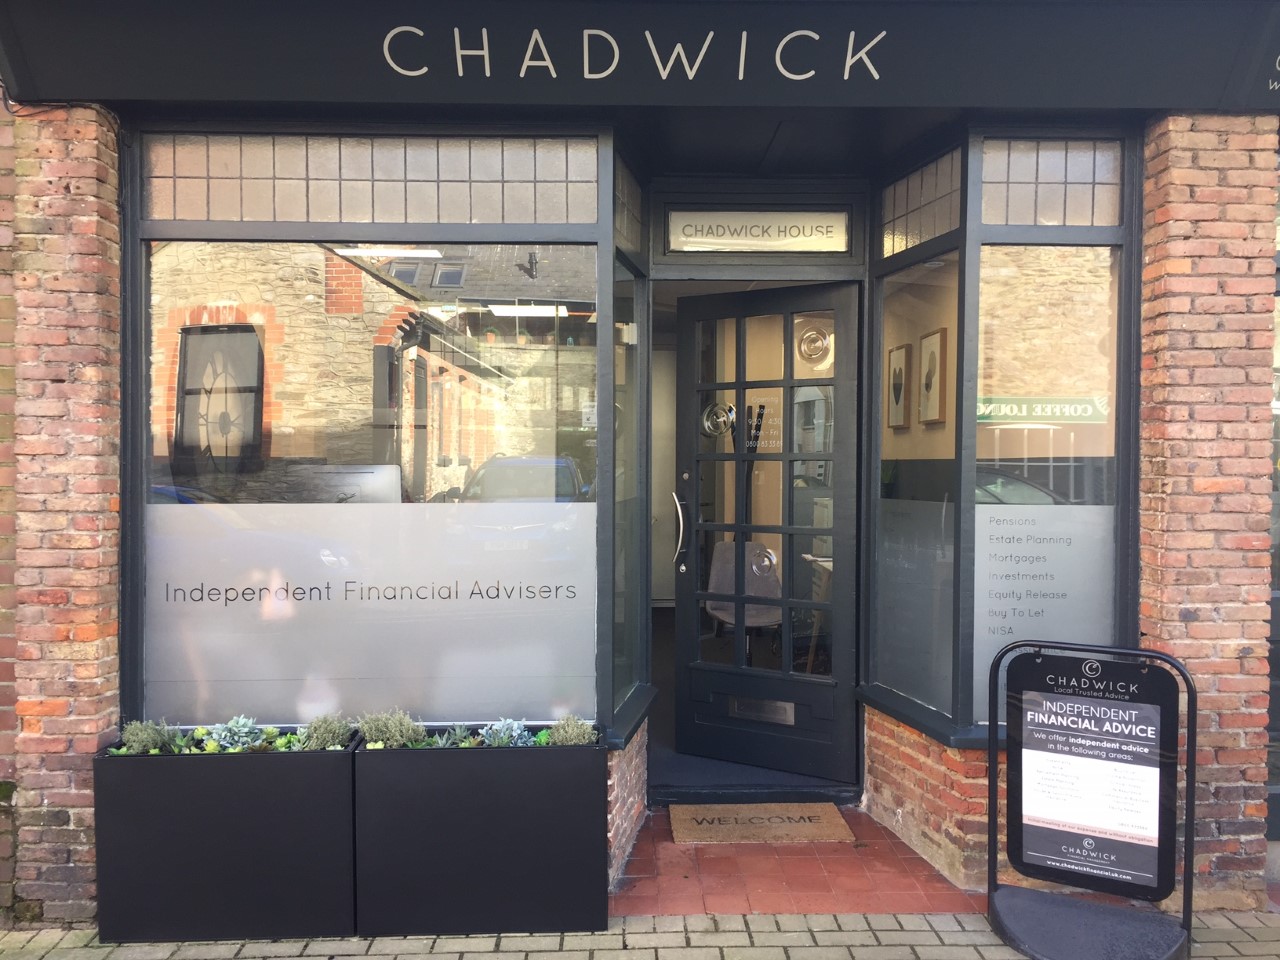 Chadwick Financial Management